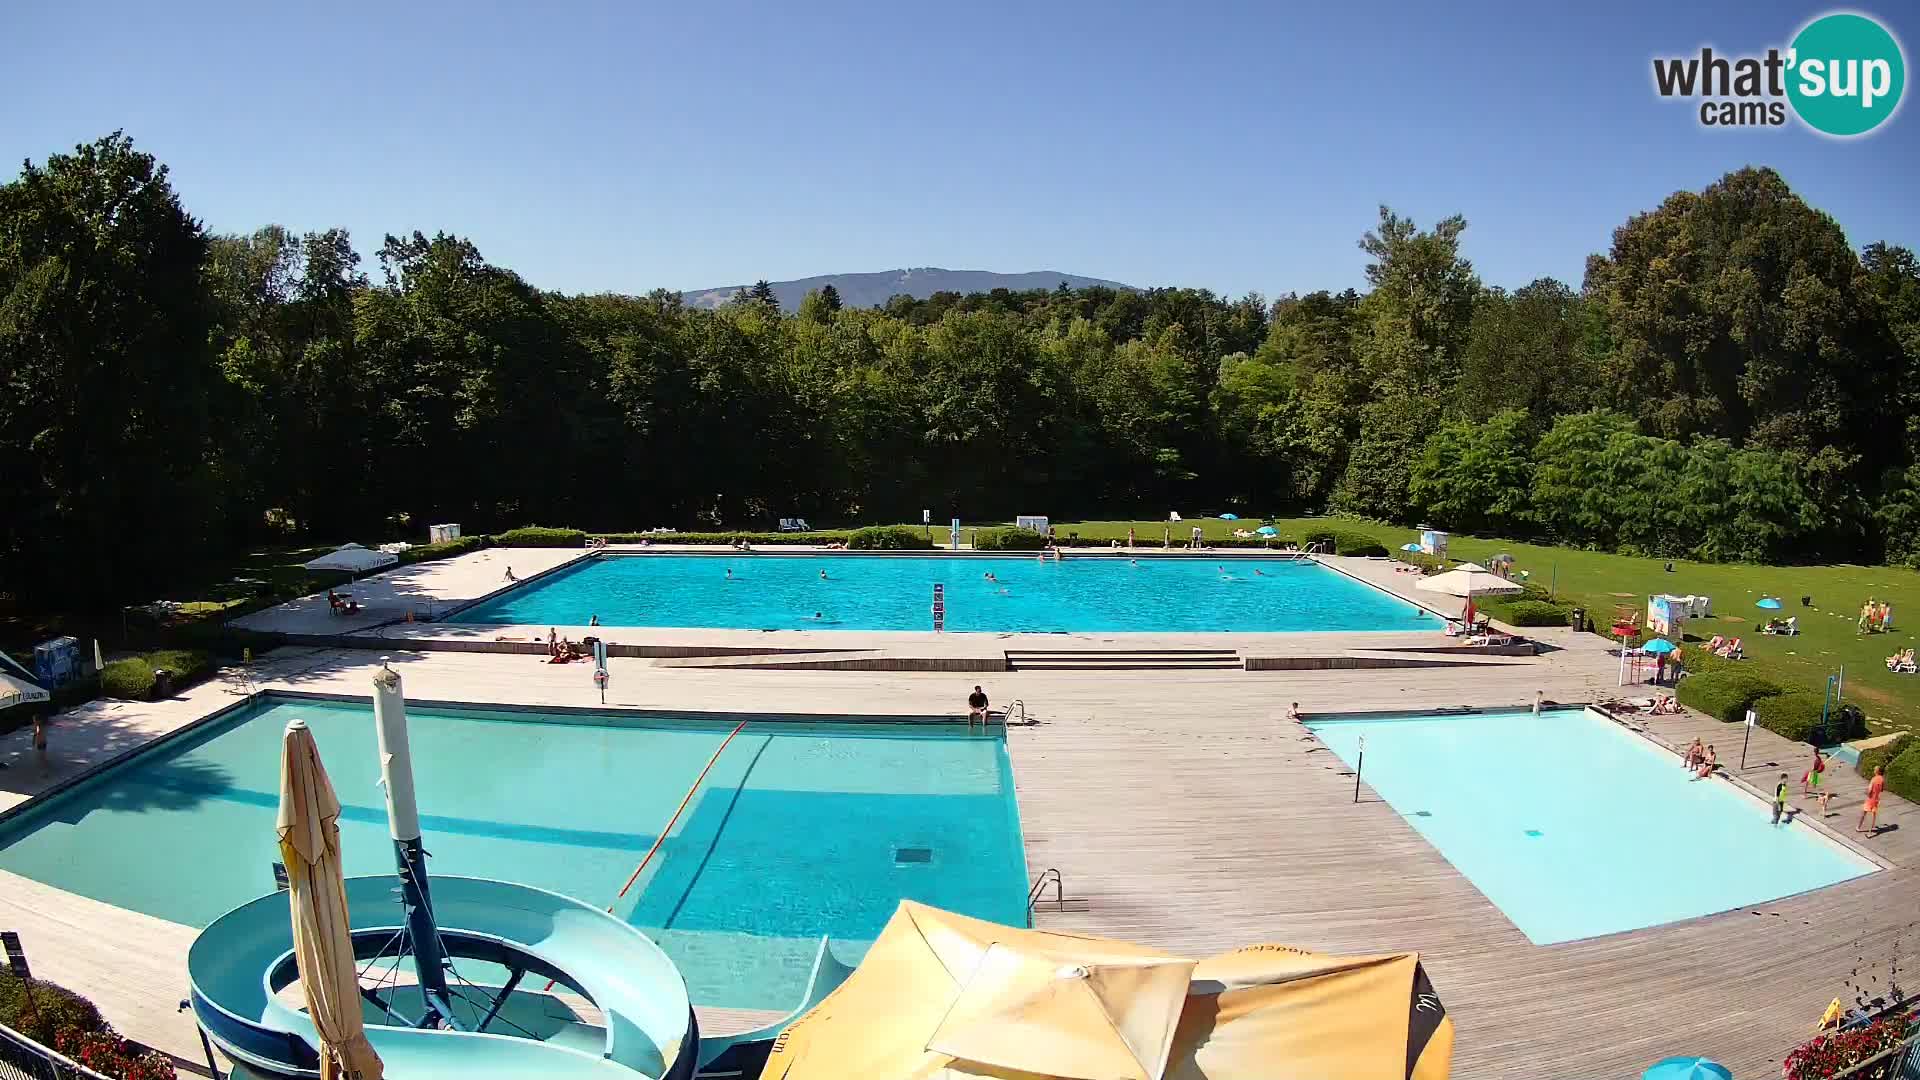 Webcam Schwimmbad der Insel Maribor